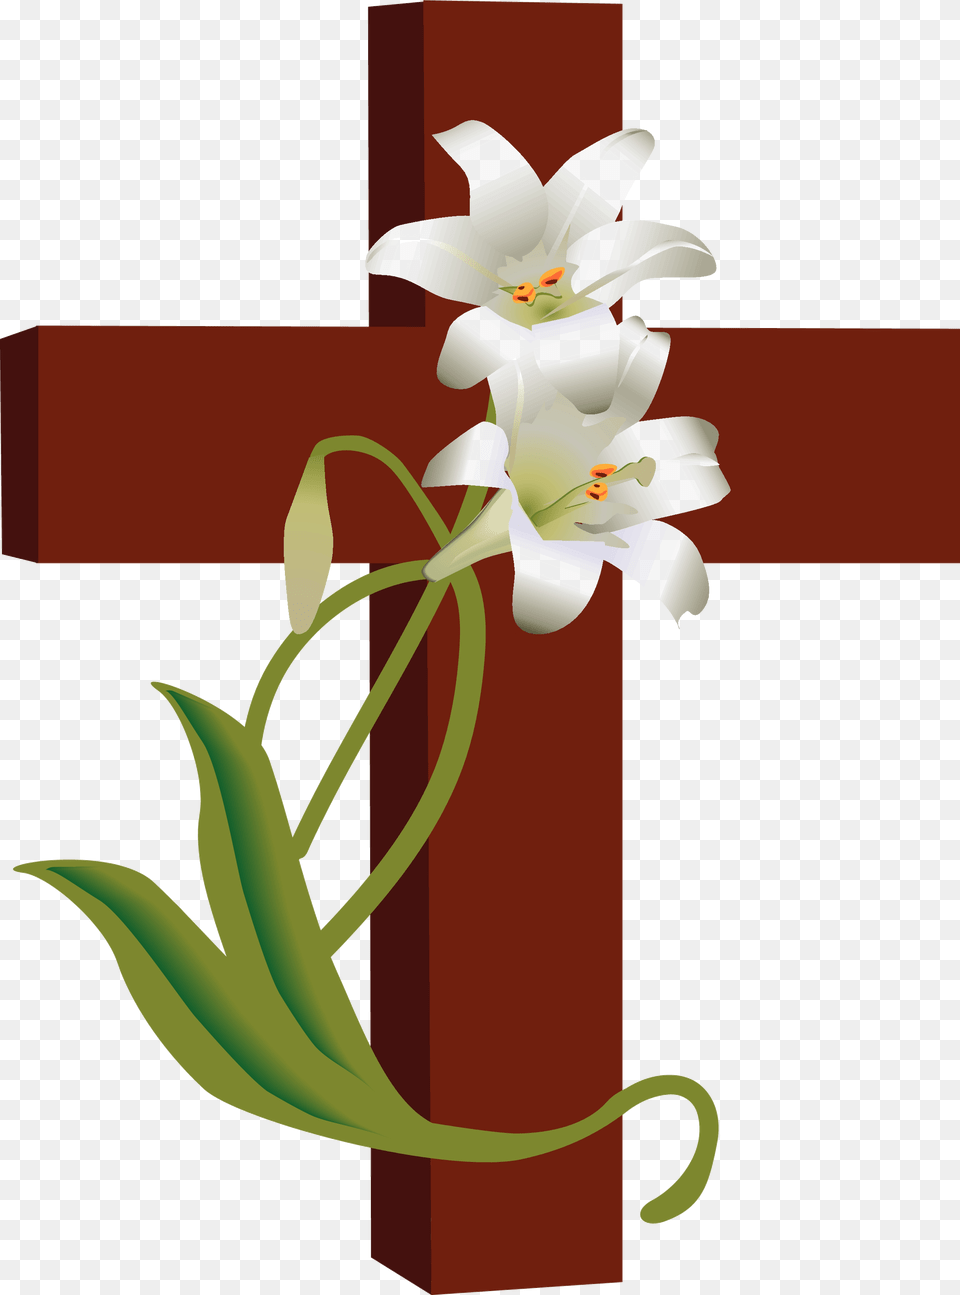 Good Friday Image Religious Easter Clip Art, Flower, Plant, Cross, Symbol Png